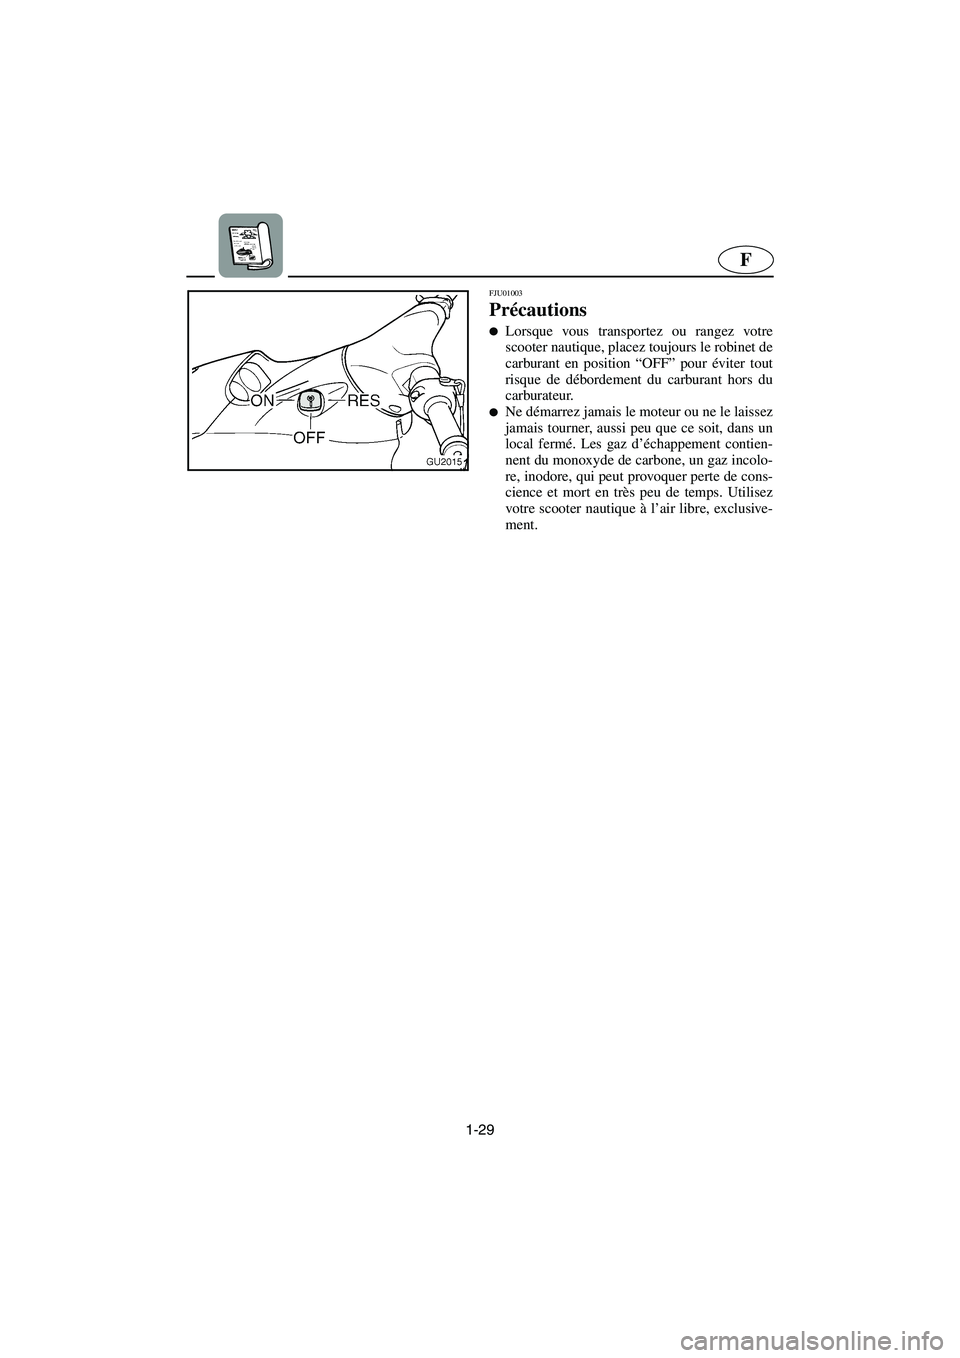 YAMAHA XL 700 2005  Manuale de Empleo (in Spanish) 1-29
F
FJU01003 
Précautions  
Lorsque vous transportez ou rangez votre
scooter nautique, placez toujours le robinet de
carburant en position “OFF” pour éviter tout
risque de débordement du ca